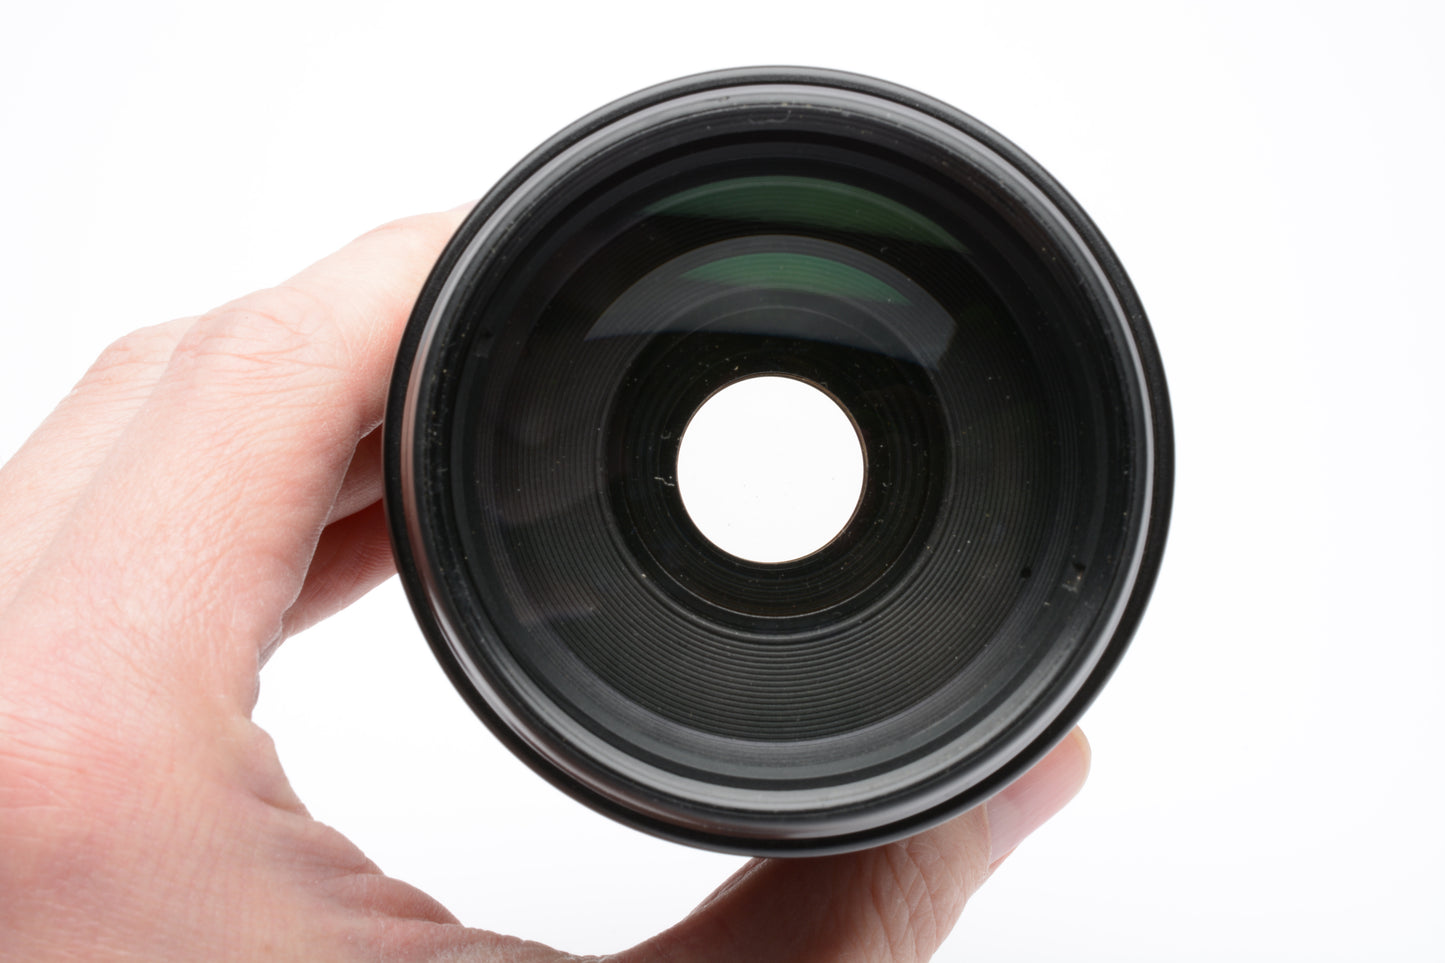 Canon EF 70-210mm f4.5-5.6 USM telephoto zoom lens, w/caps + Pola